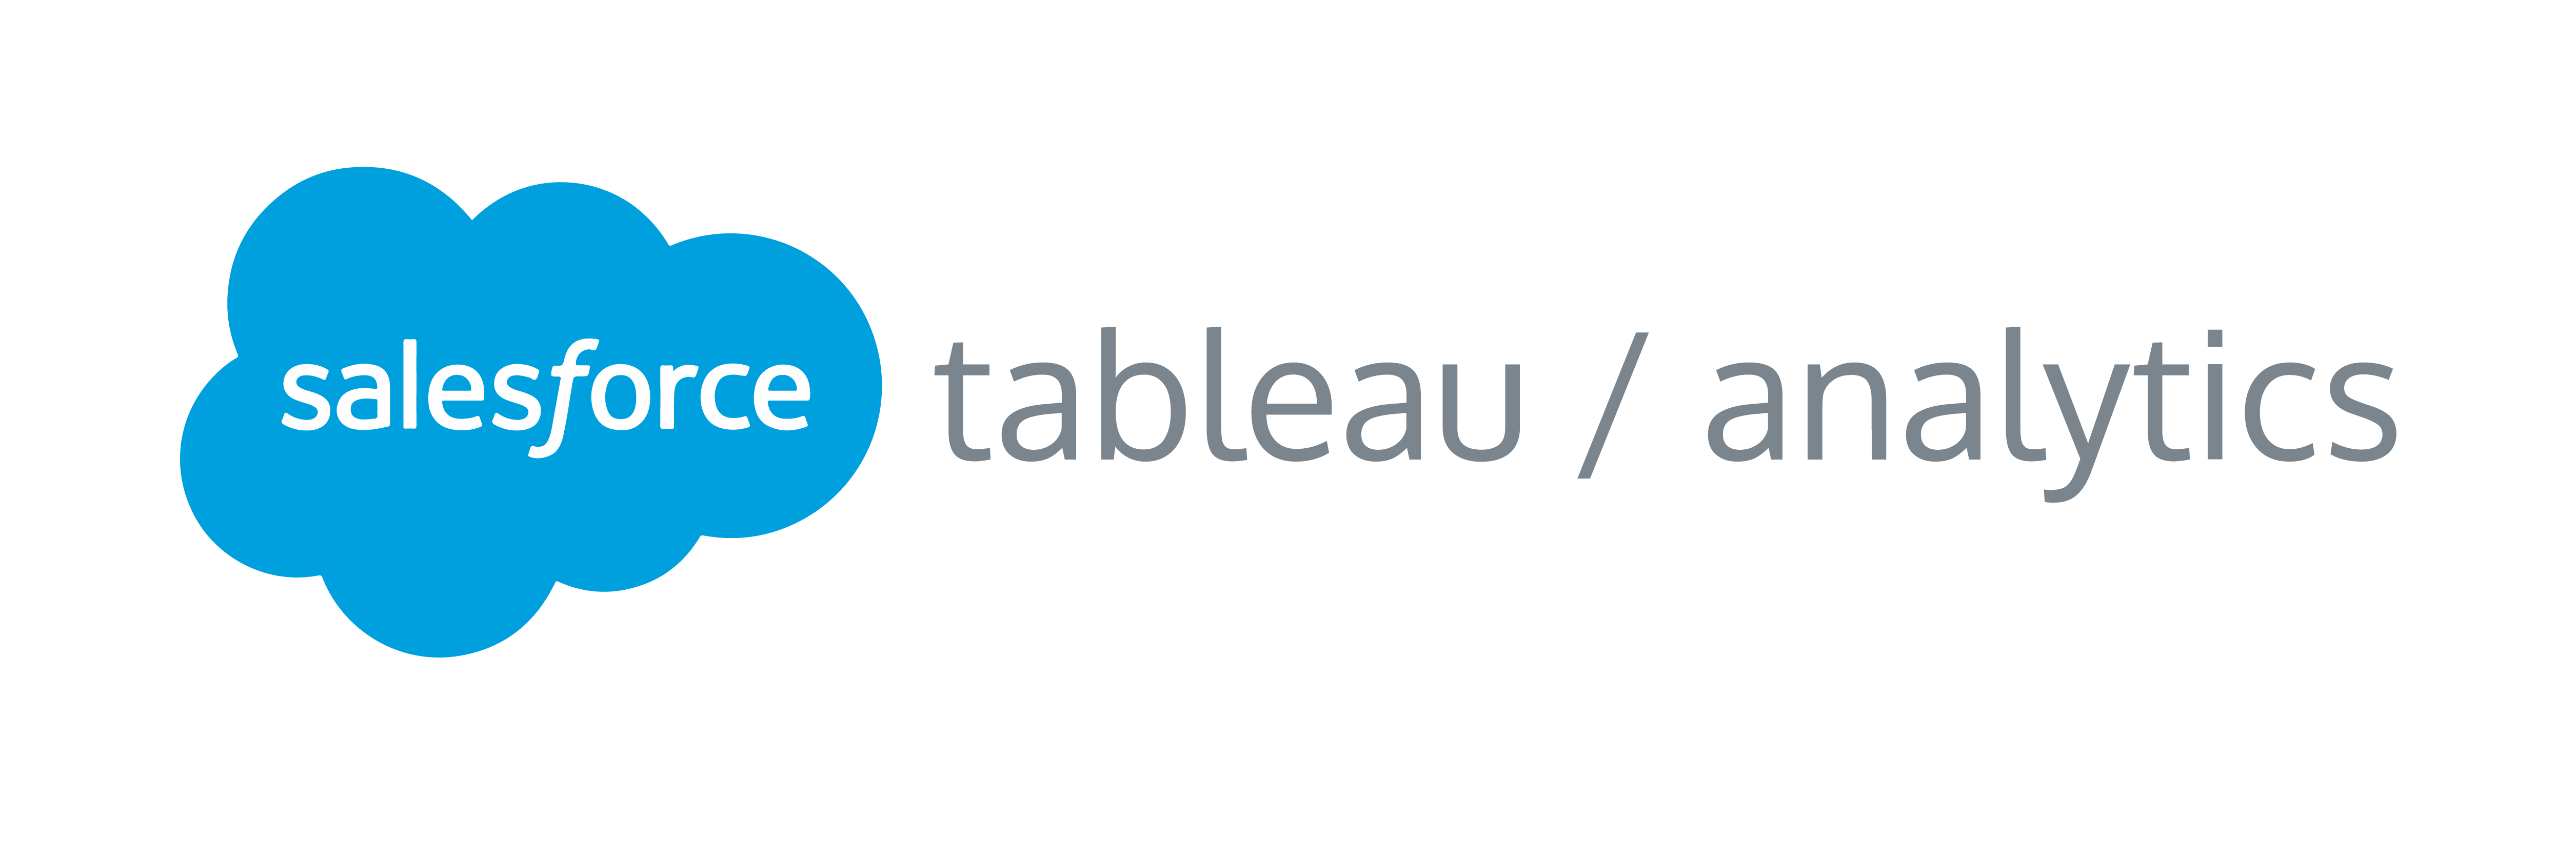 Salesforce_Tableau